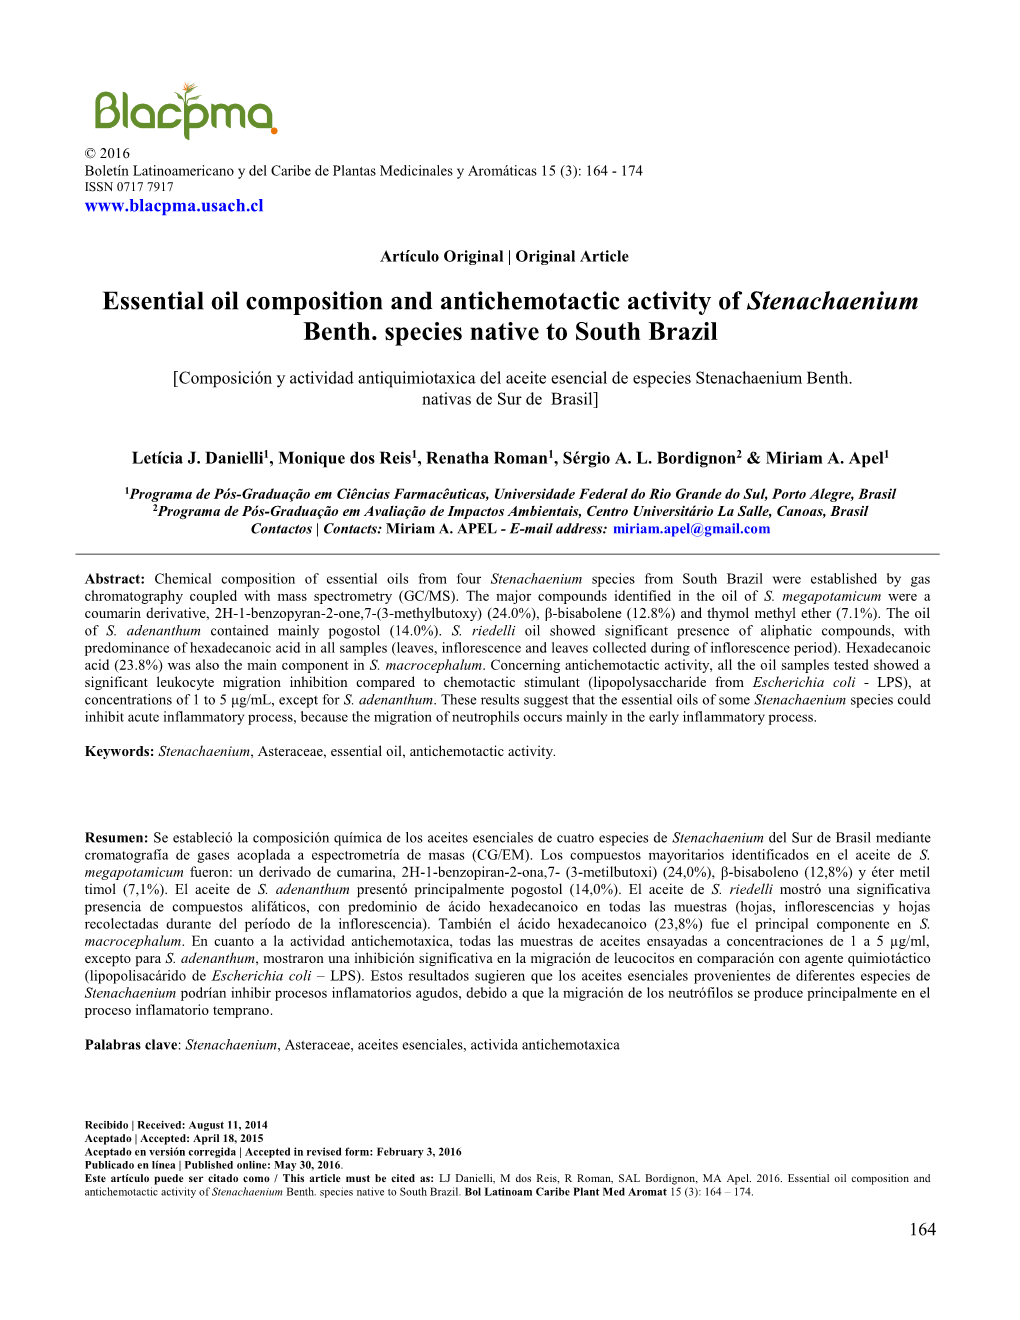 Essential Oil Composition and Antichemotactic Activity of Stenachaenium Benth